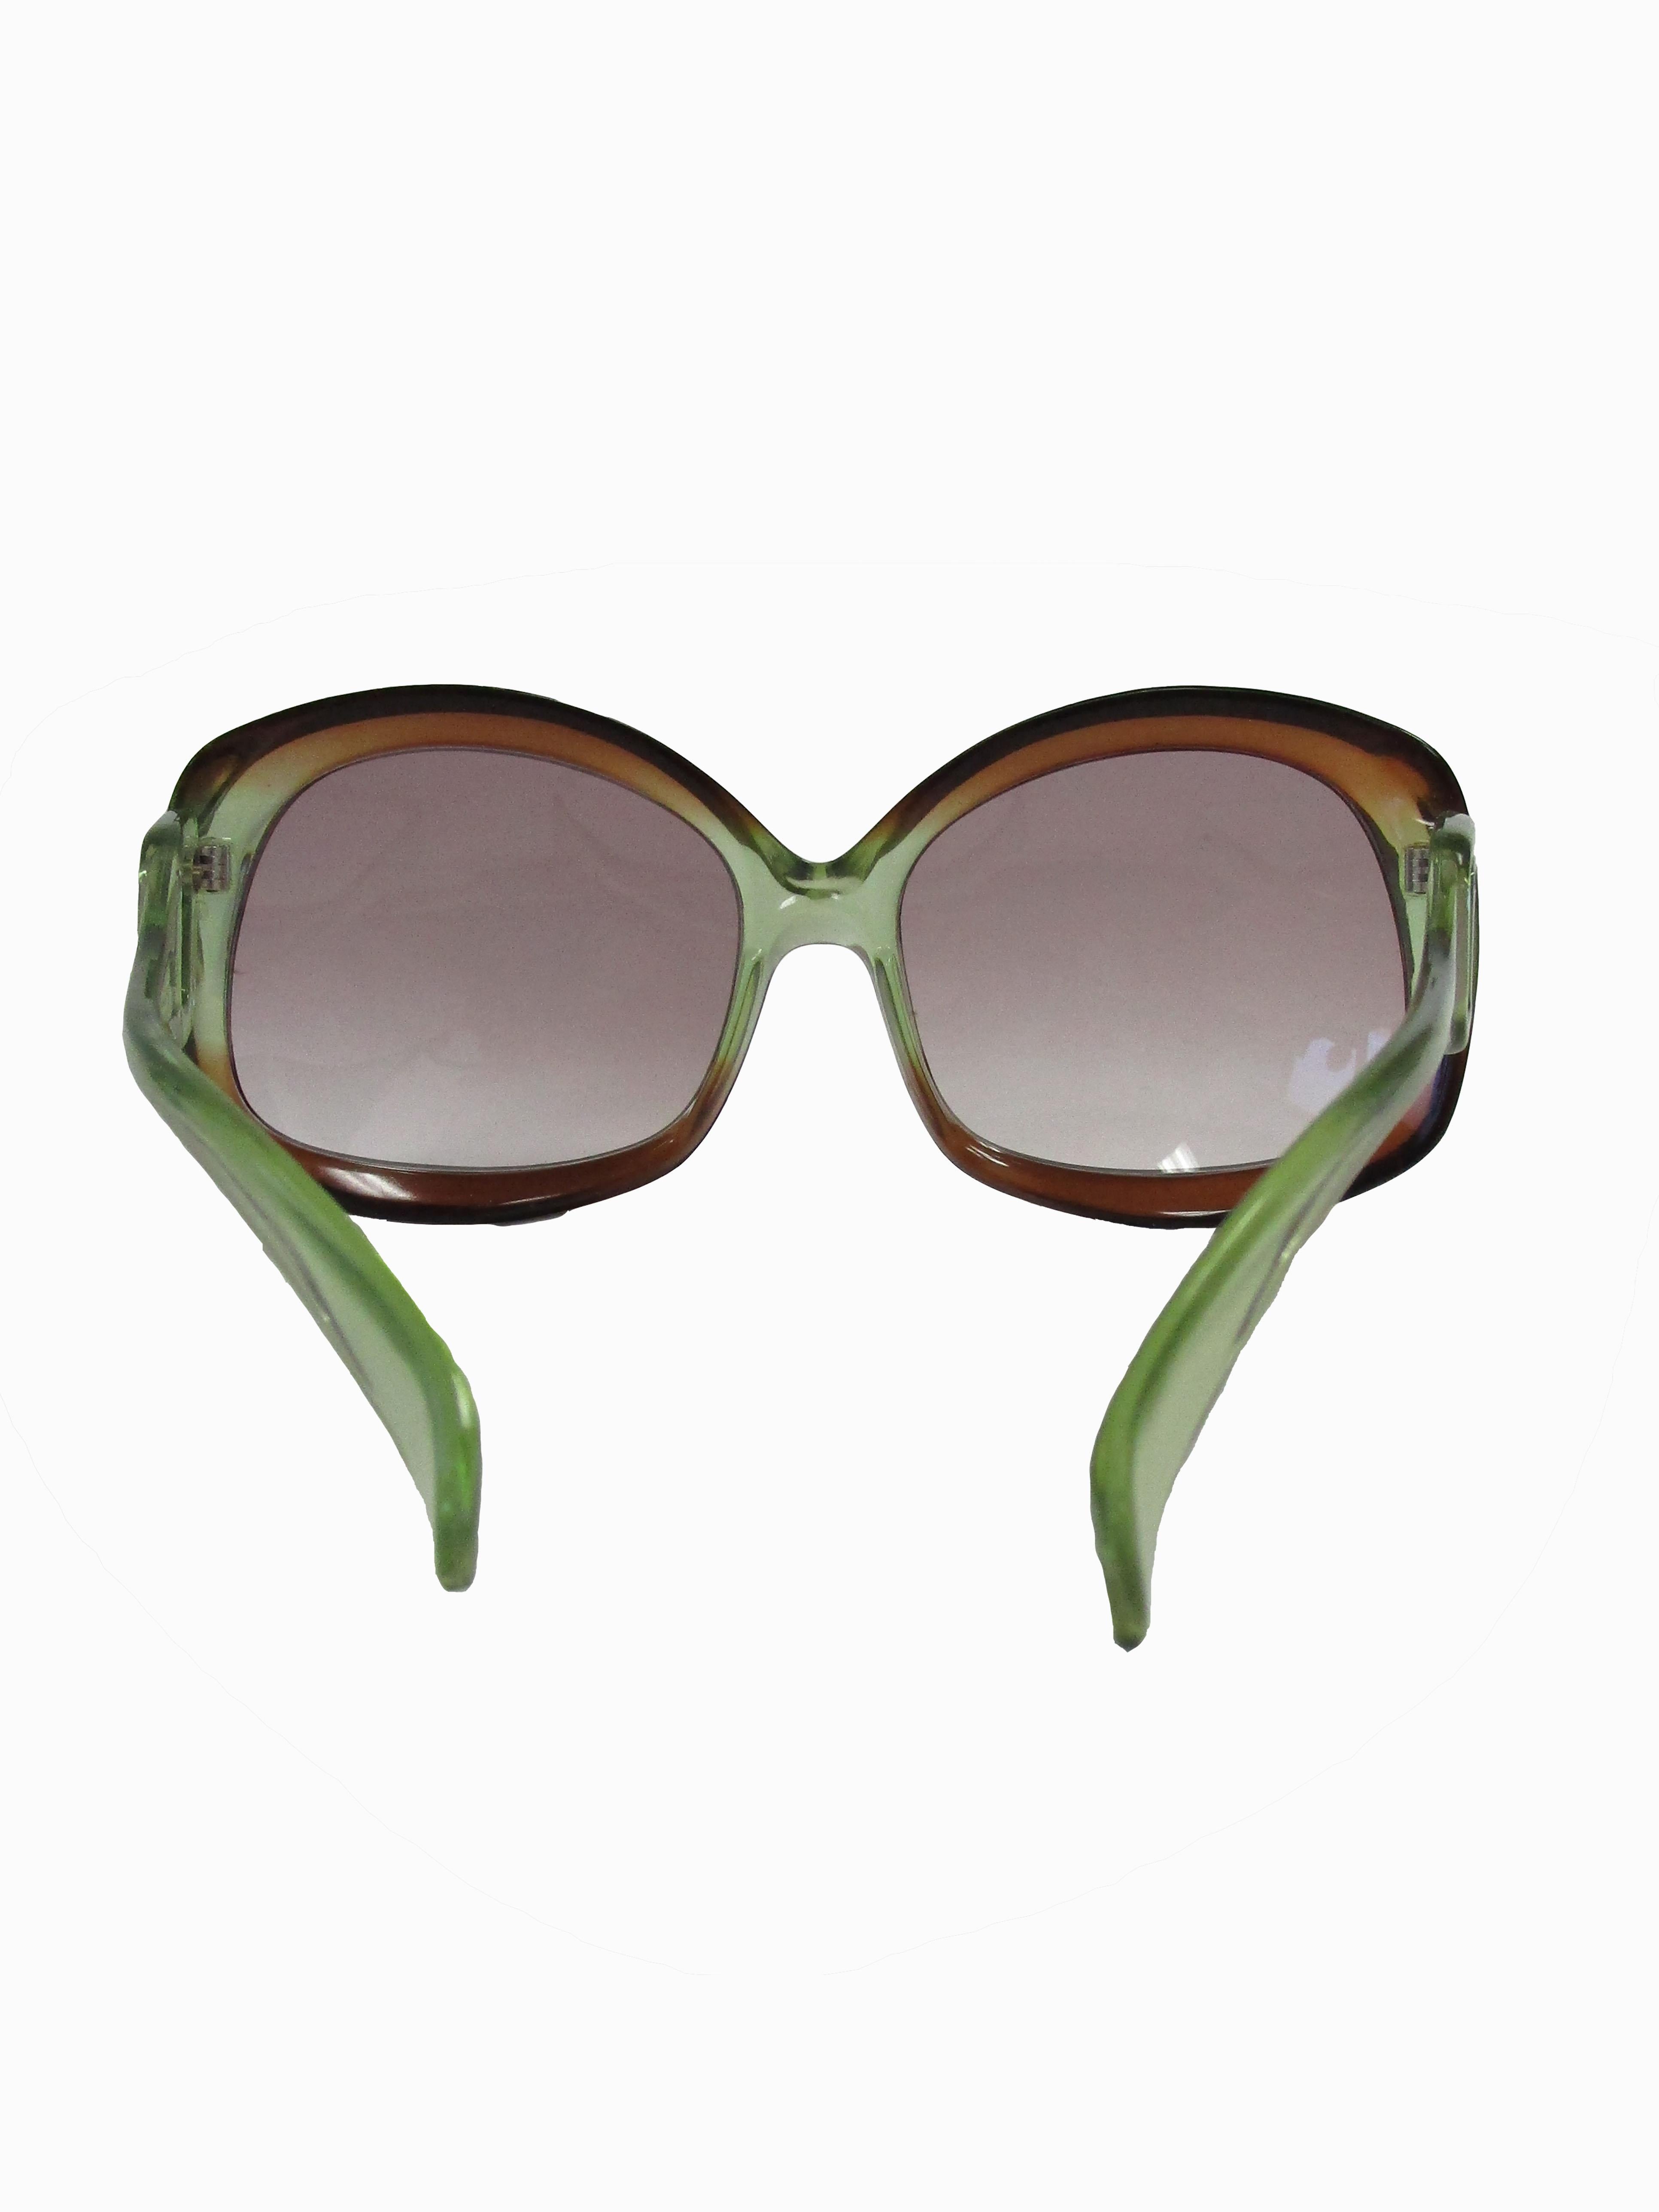 70s Italian Mod Green to Brown Ombre Sunglasses  1